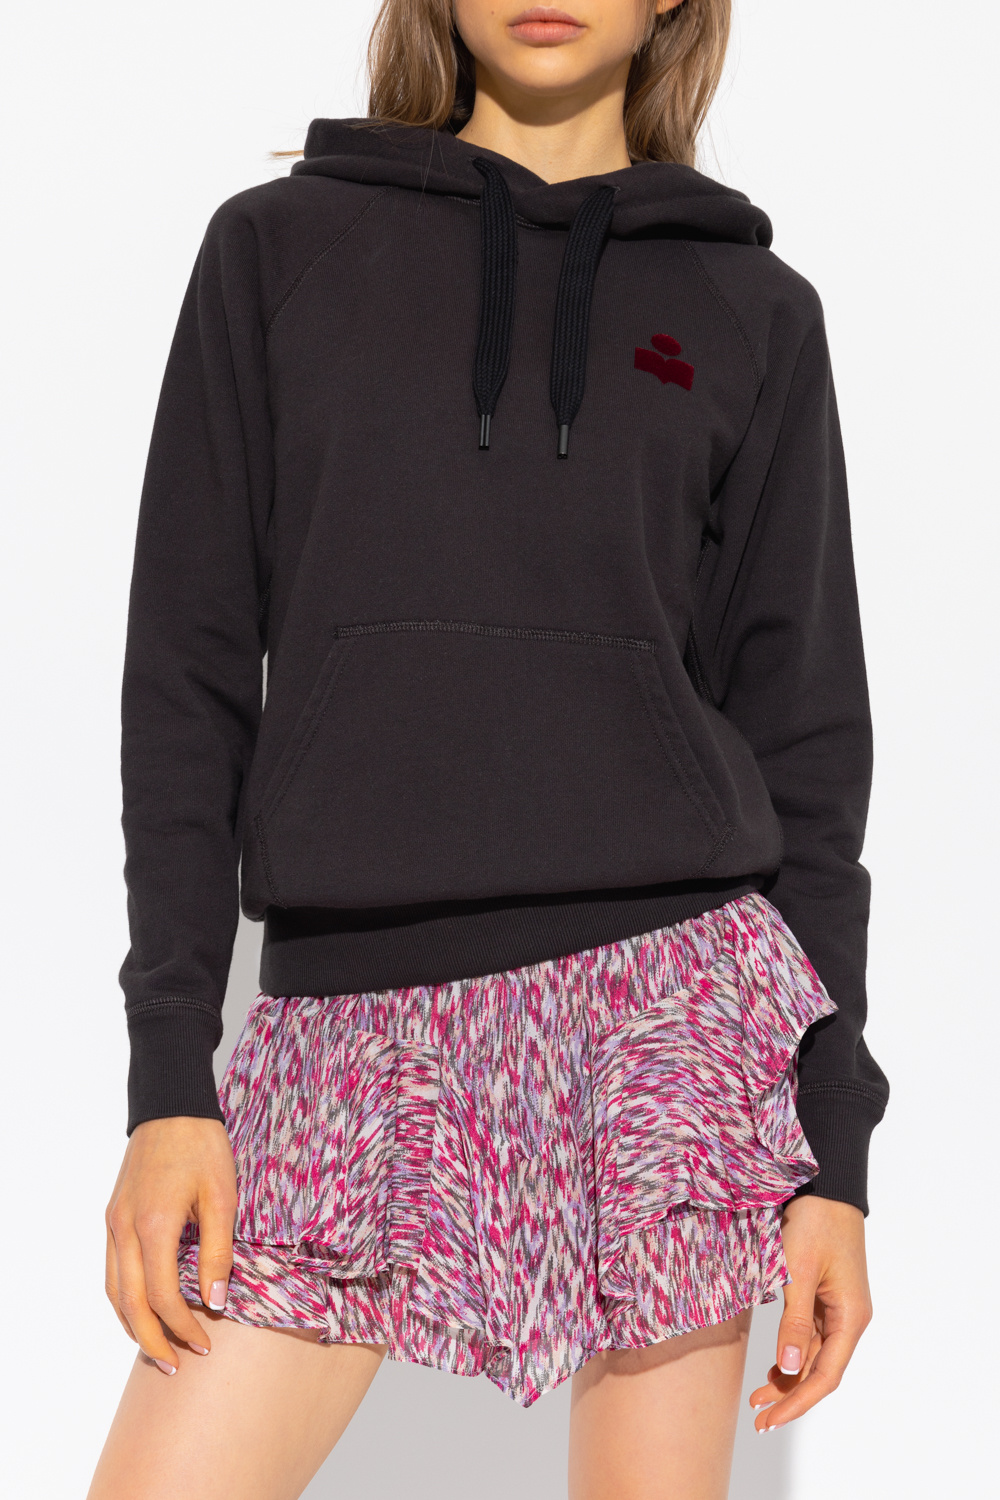 martine rose logo print long sleeve t shirt item ‘Malibu’ hoodie